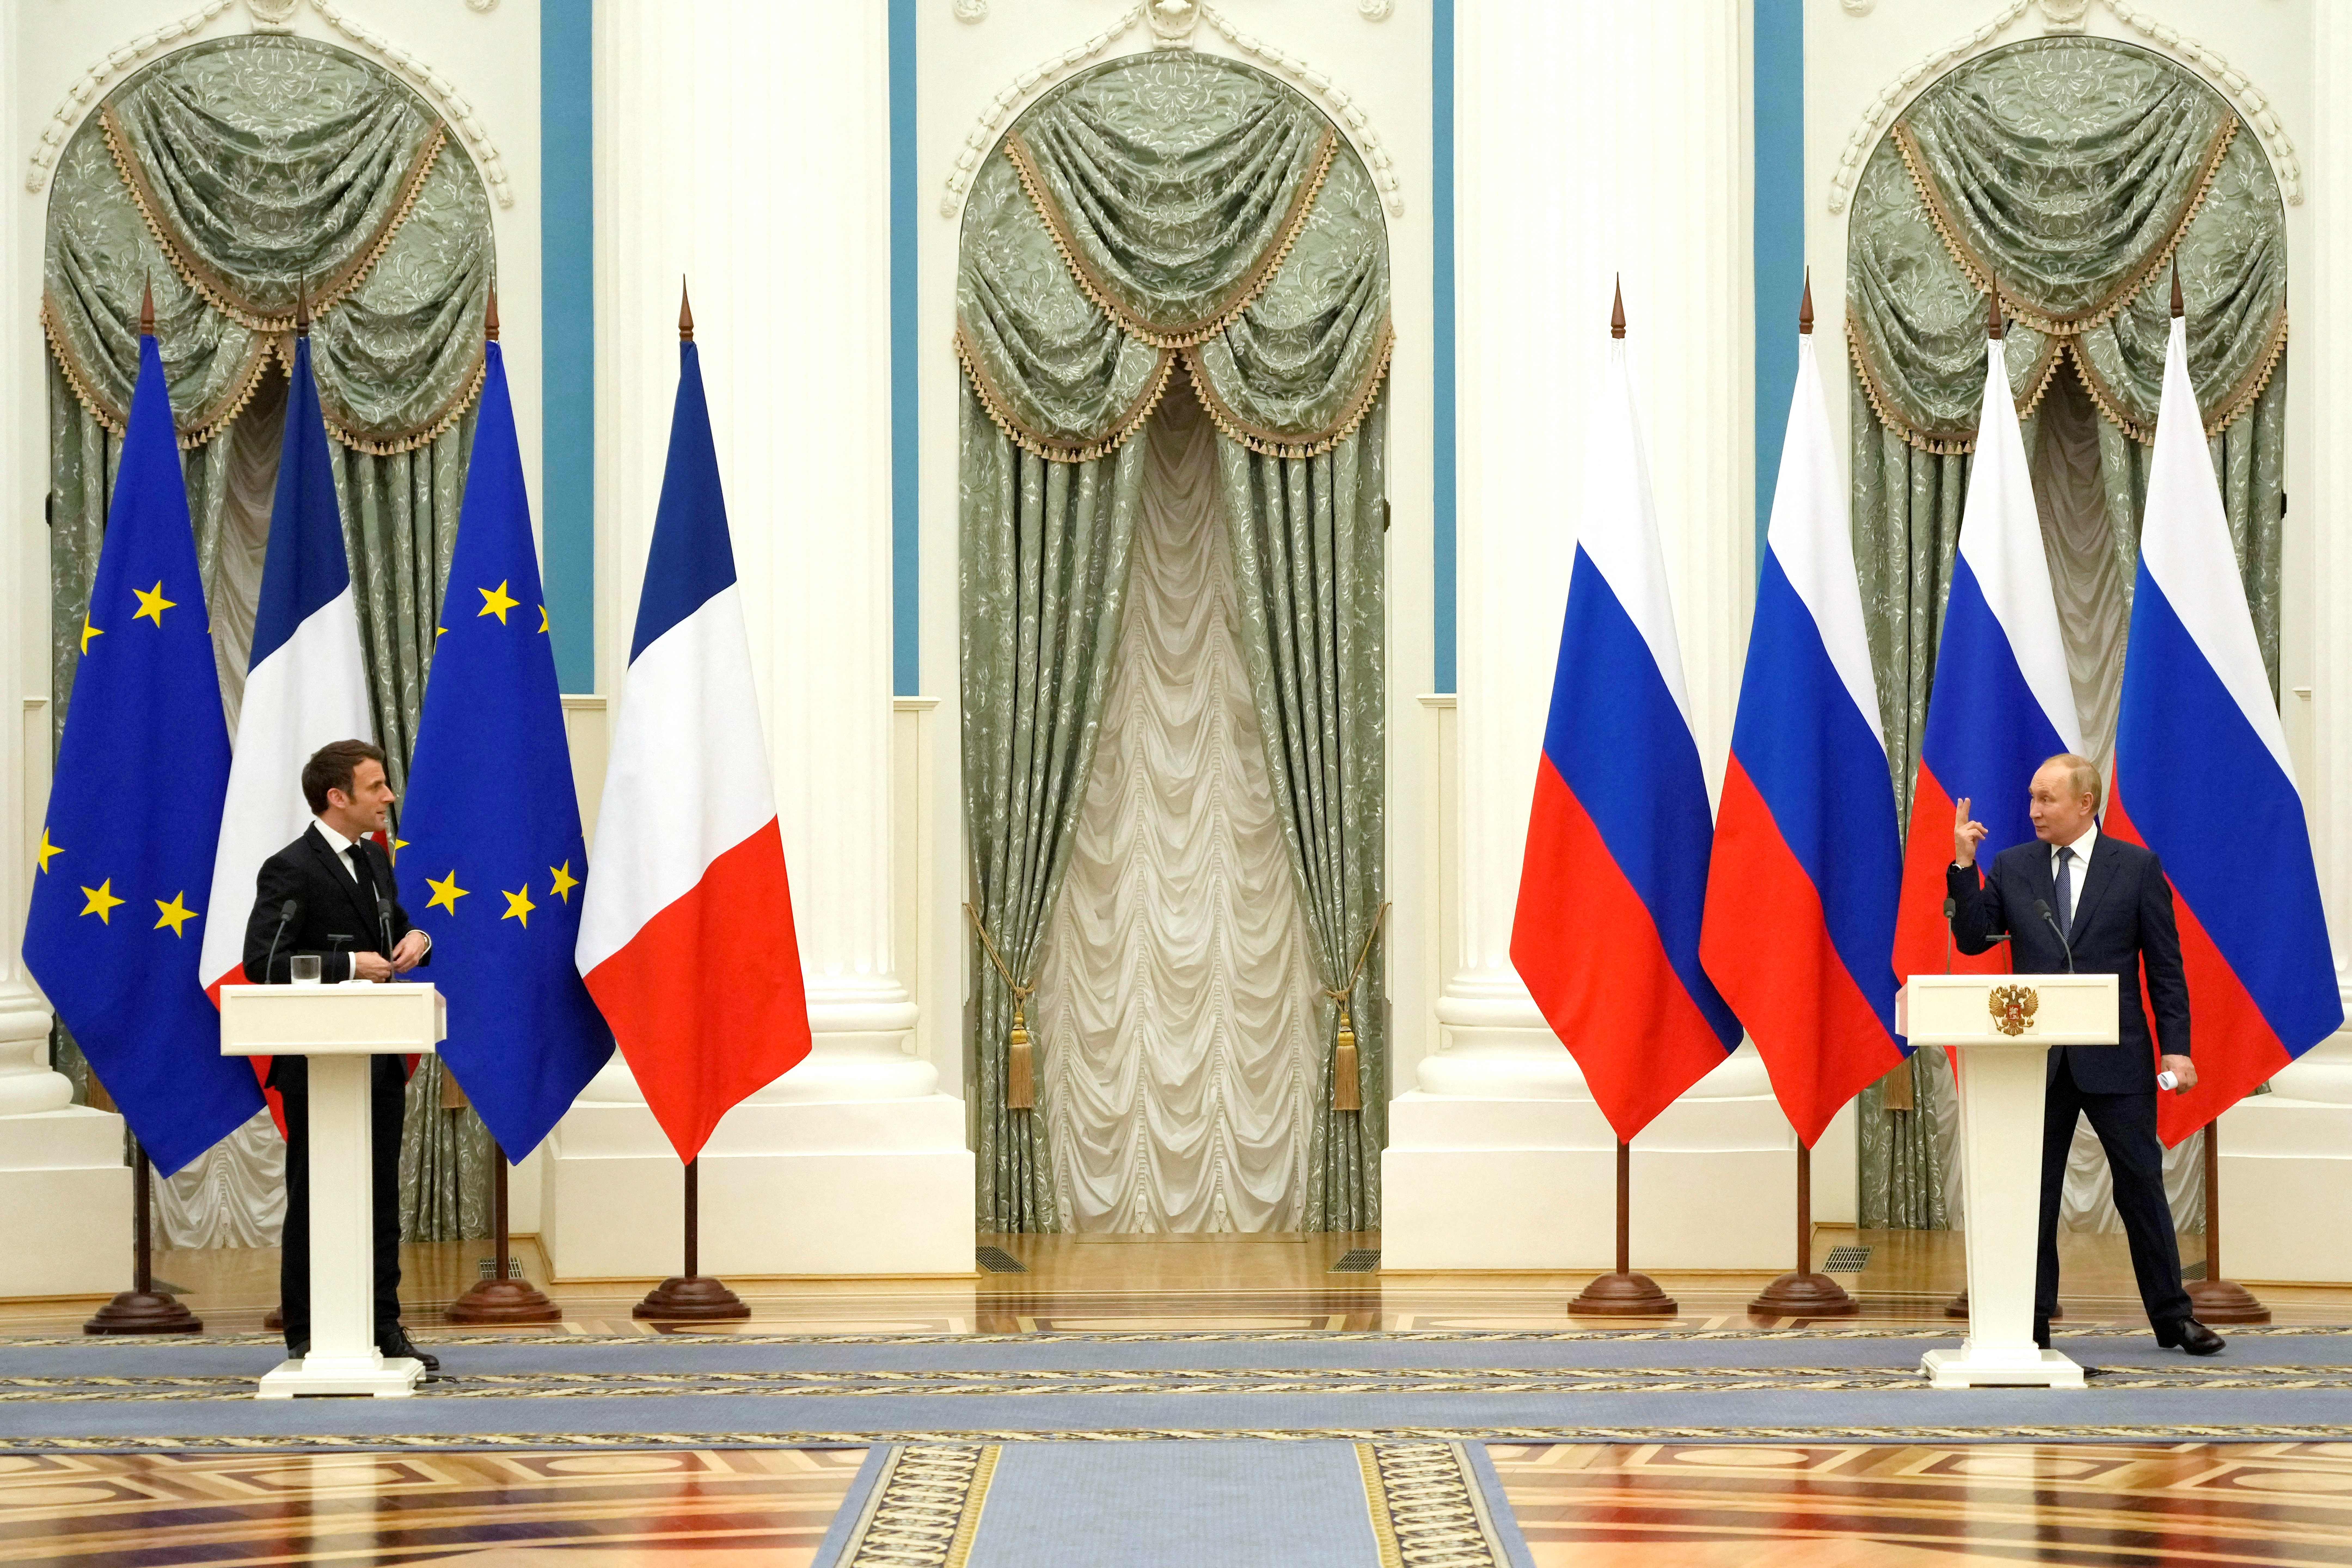 TOPSHOT-RUSSIA-FRANCE-POLITICS-TENSION-DIPLOMACY-CONFLICT